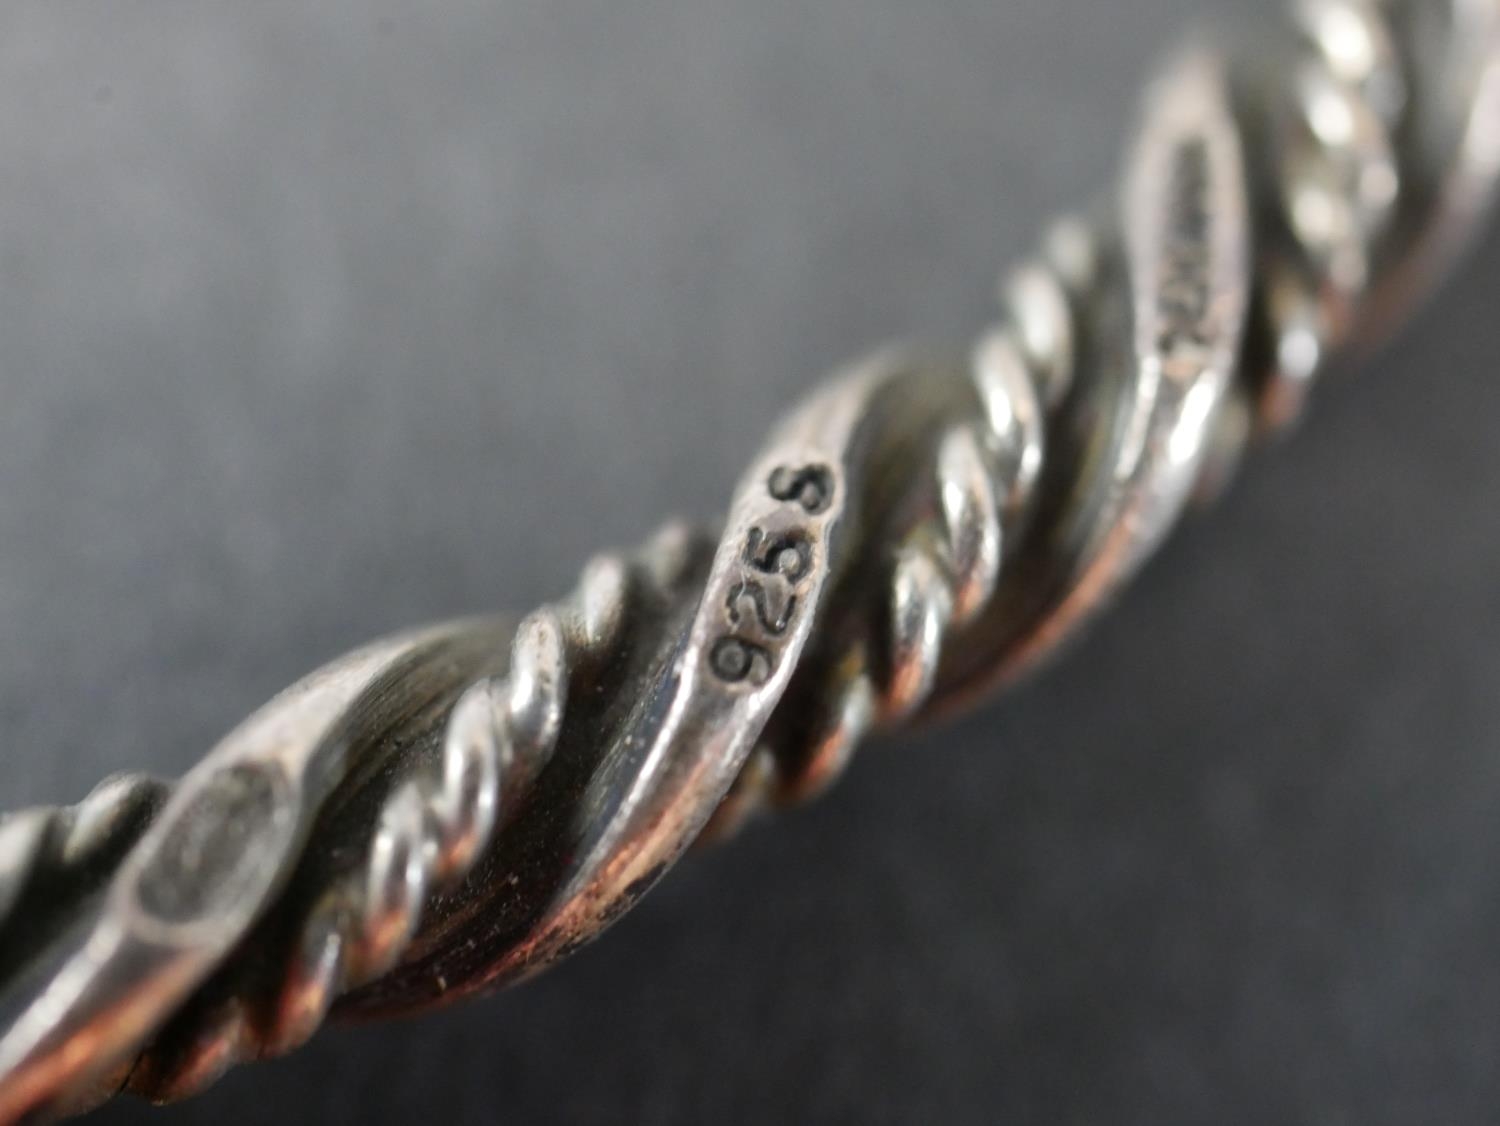 A Georg Jensen silver rope twist bangle, design no. 17B, George Jensen oval mark. - Image 6 of 7